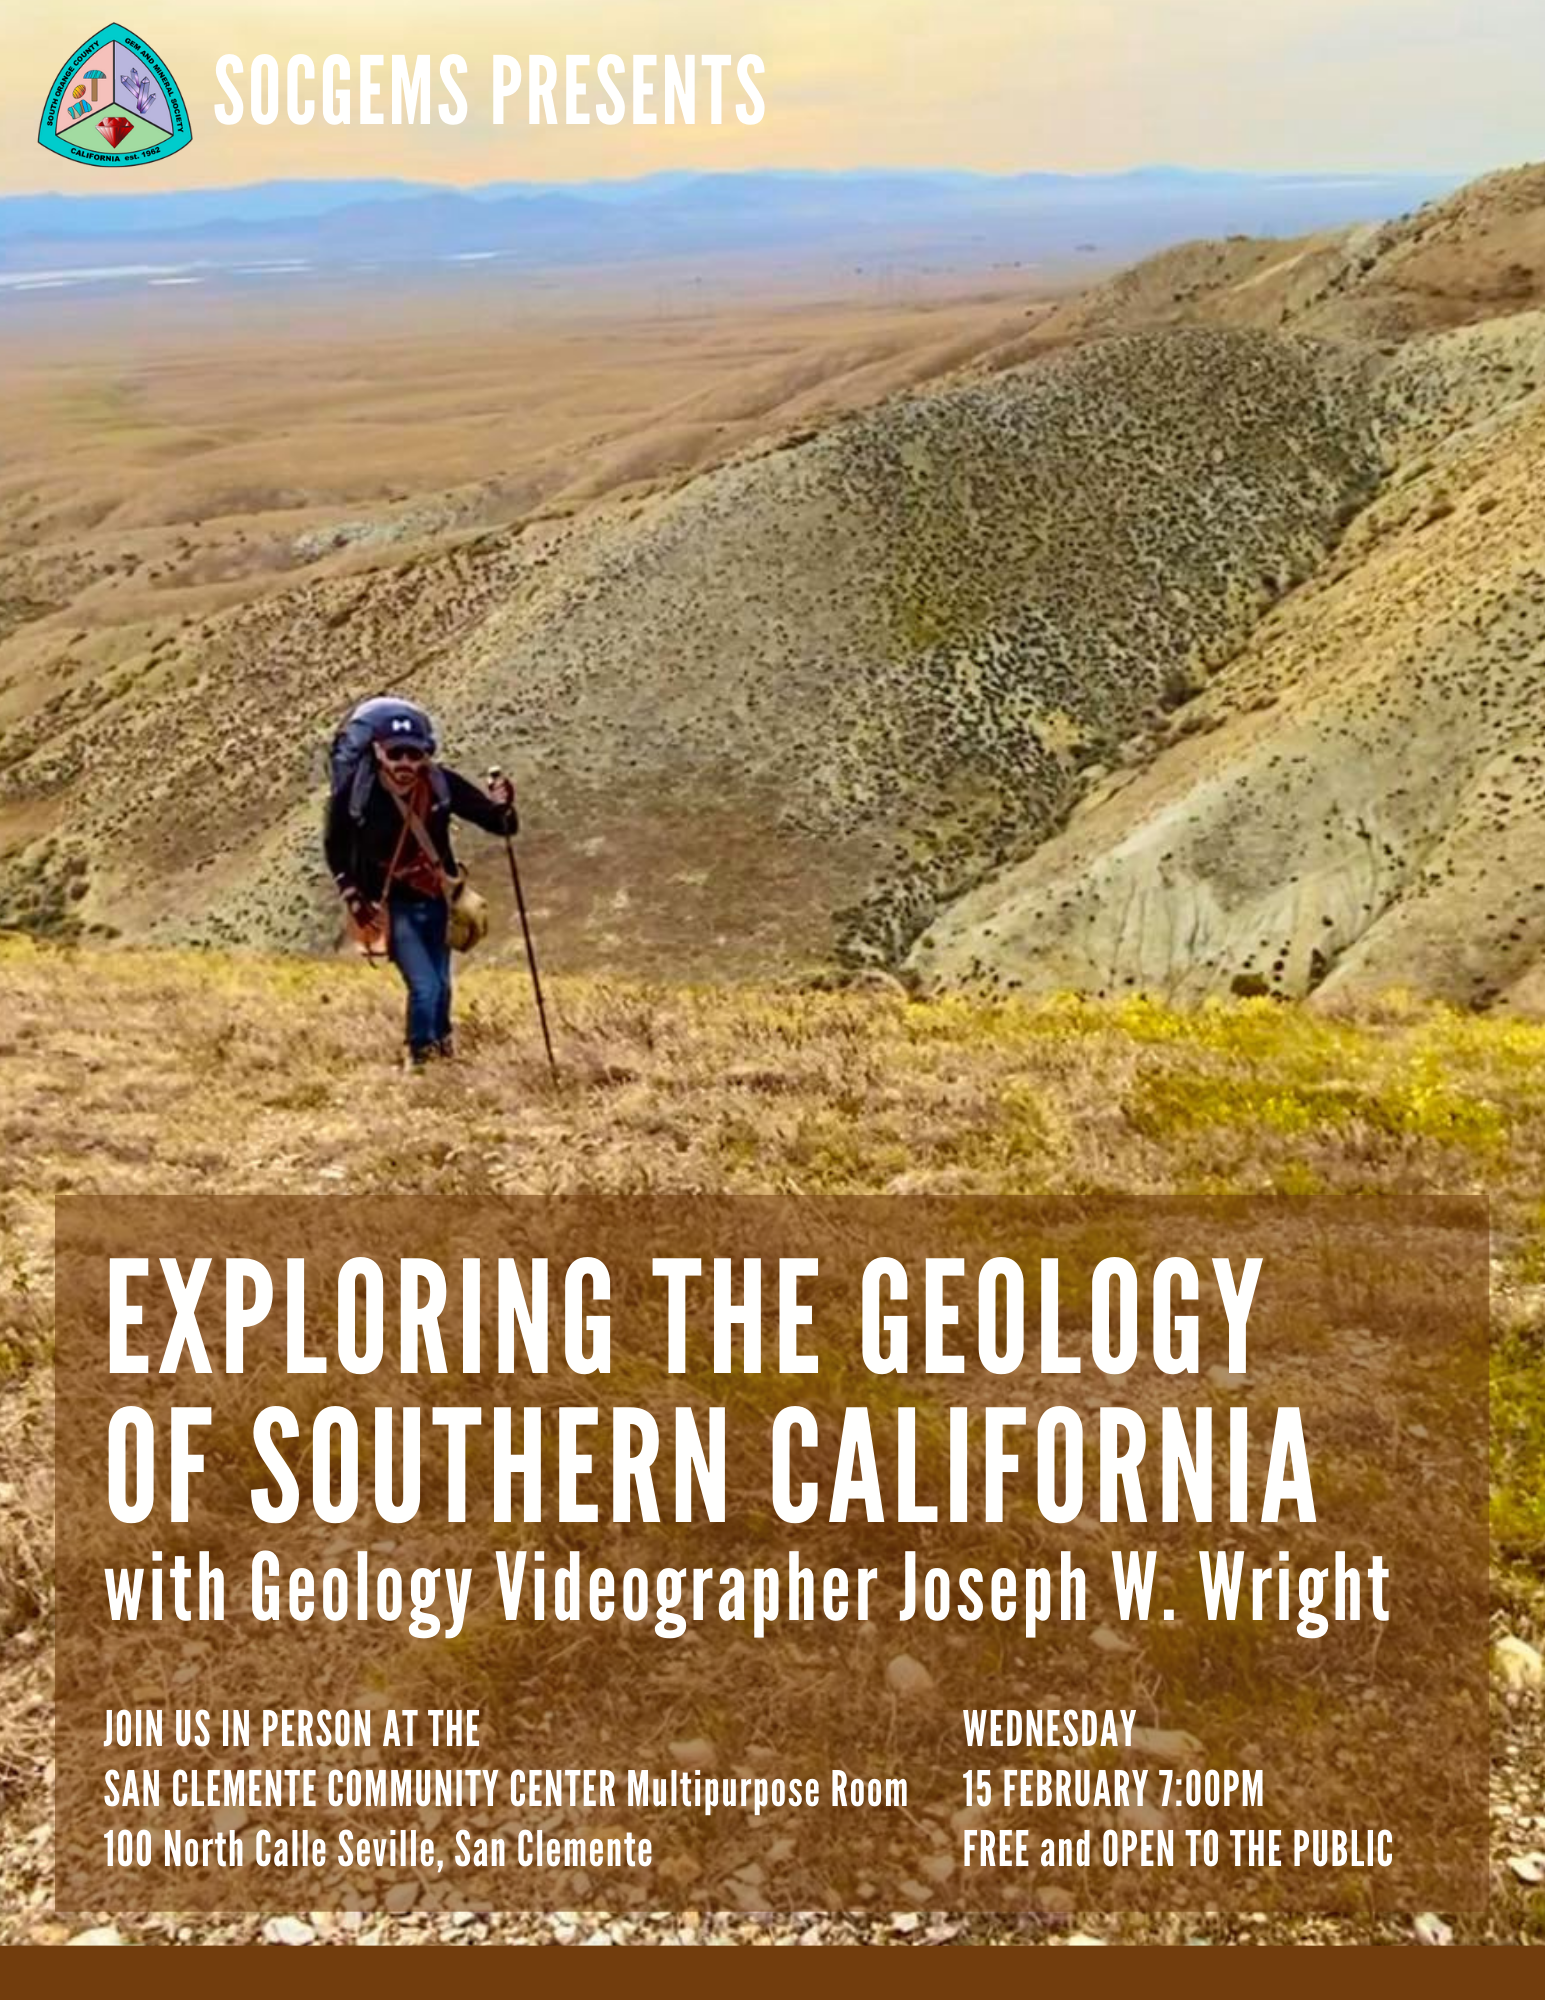 Joseph Wright Geology